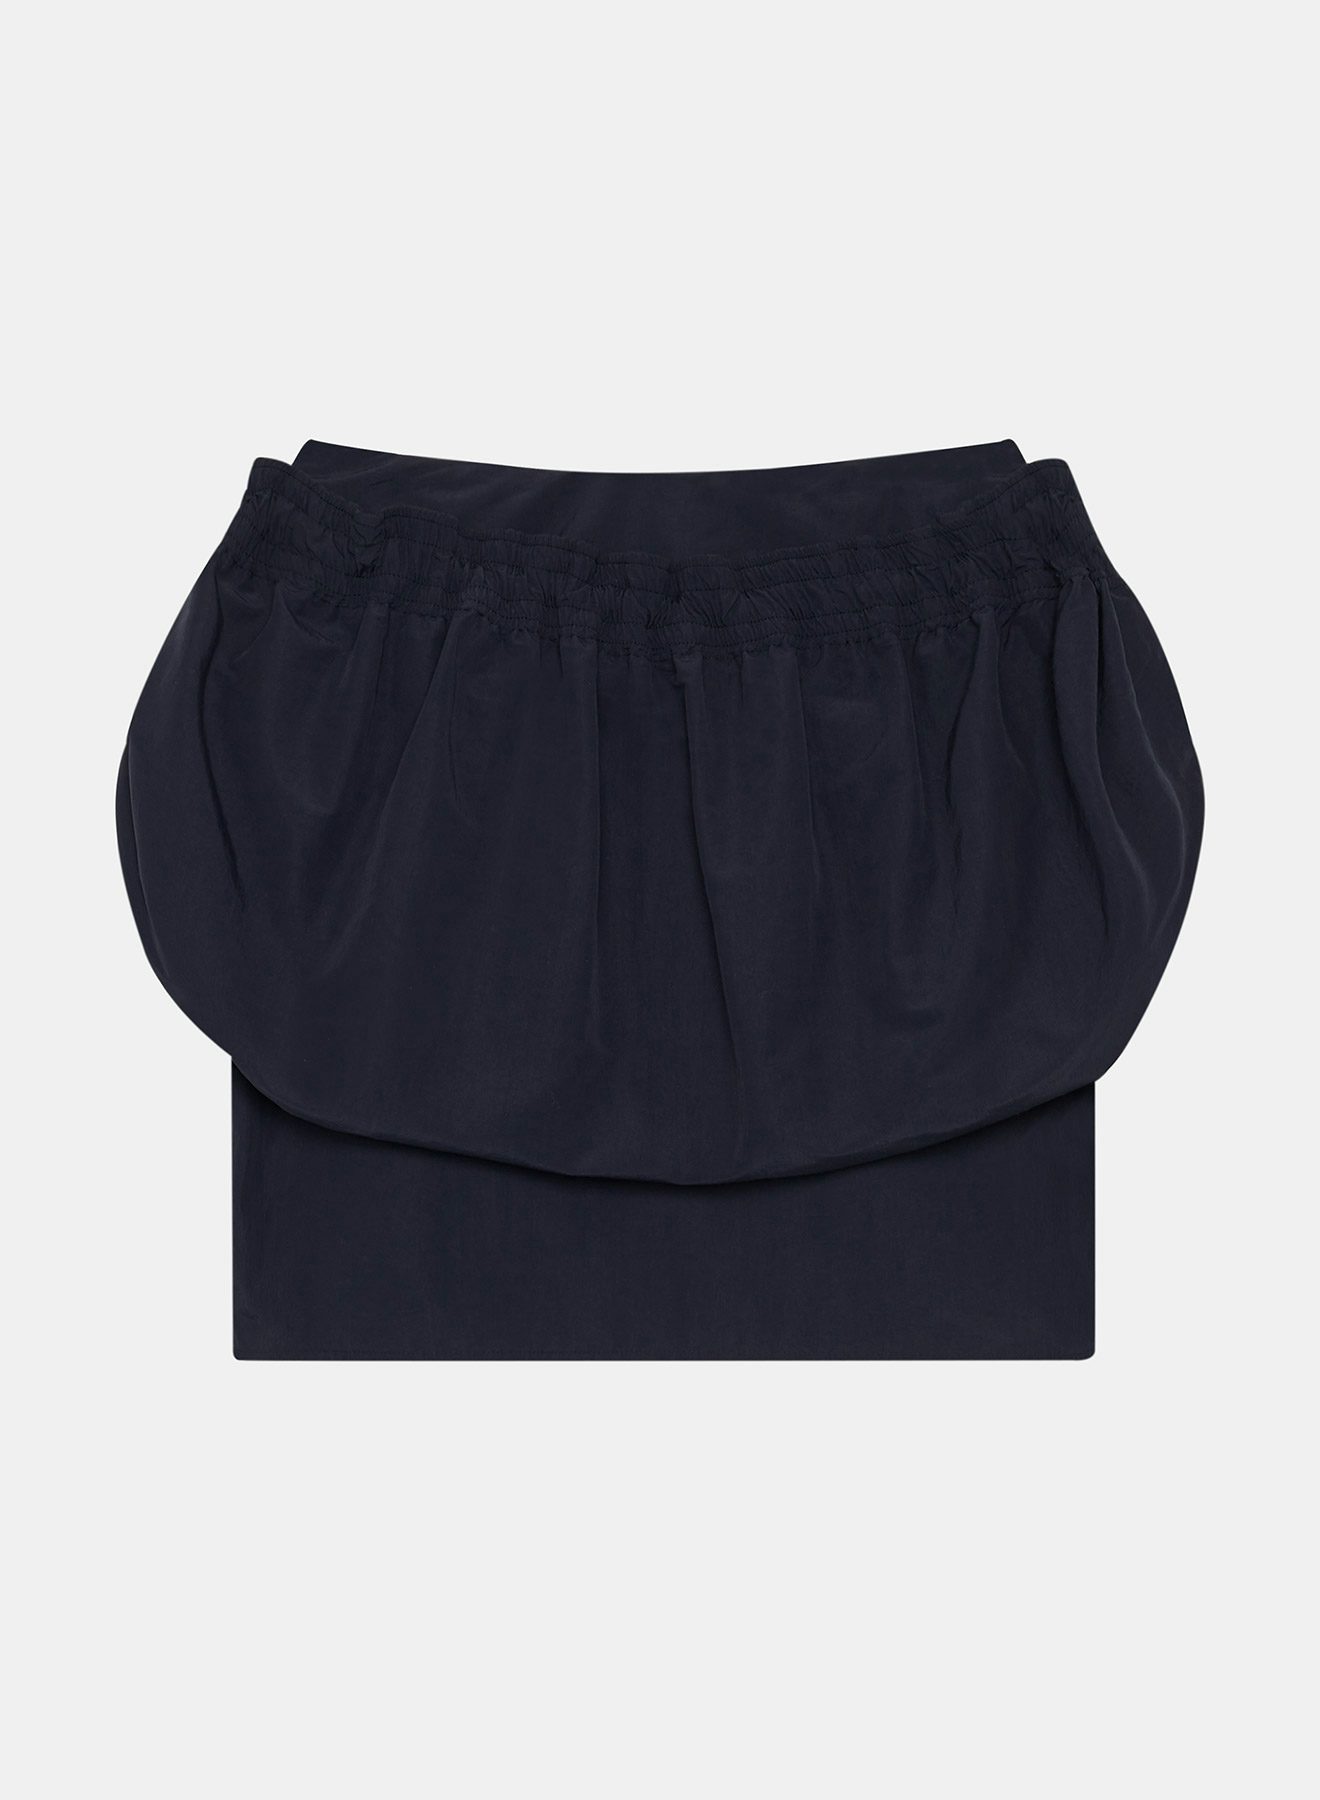 Ball Skirt with Drawstring in Dark Navy - Nina Ricci